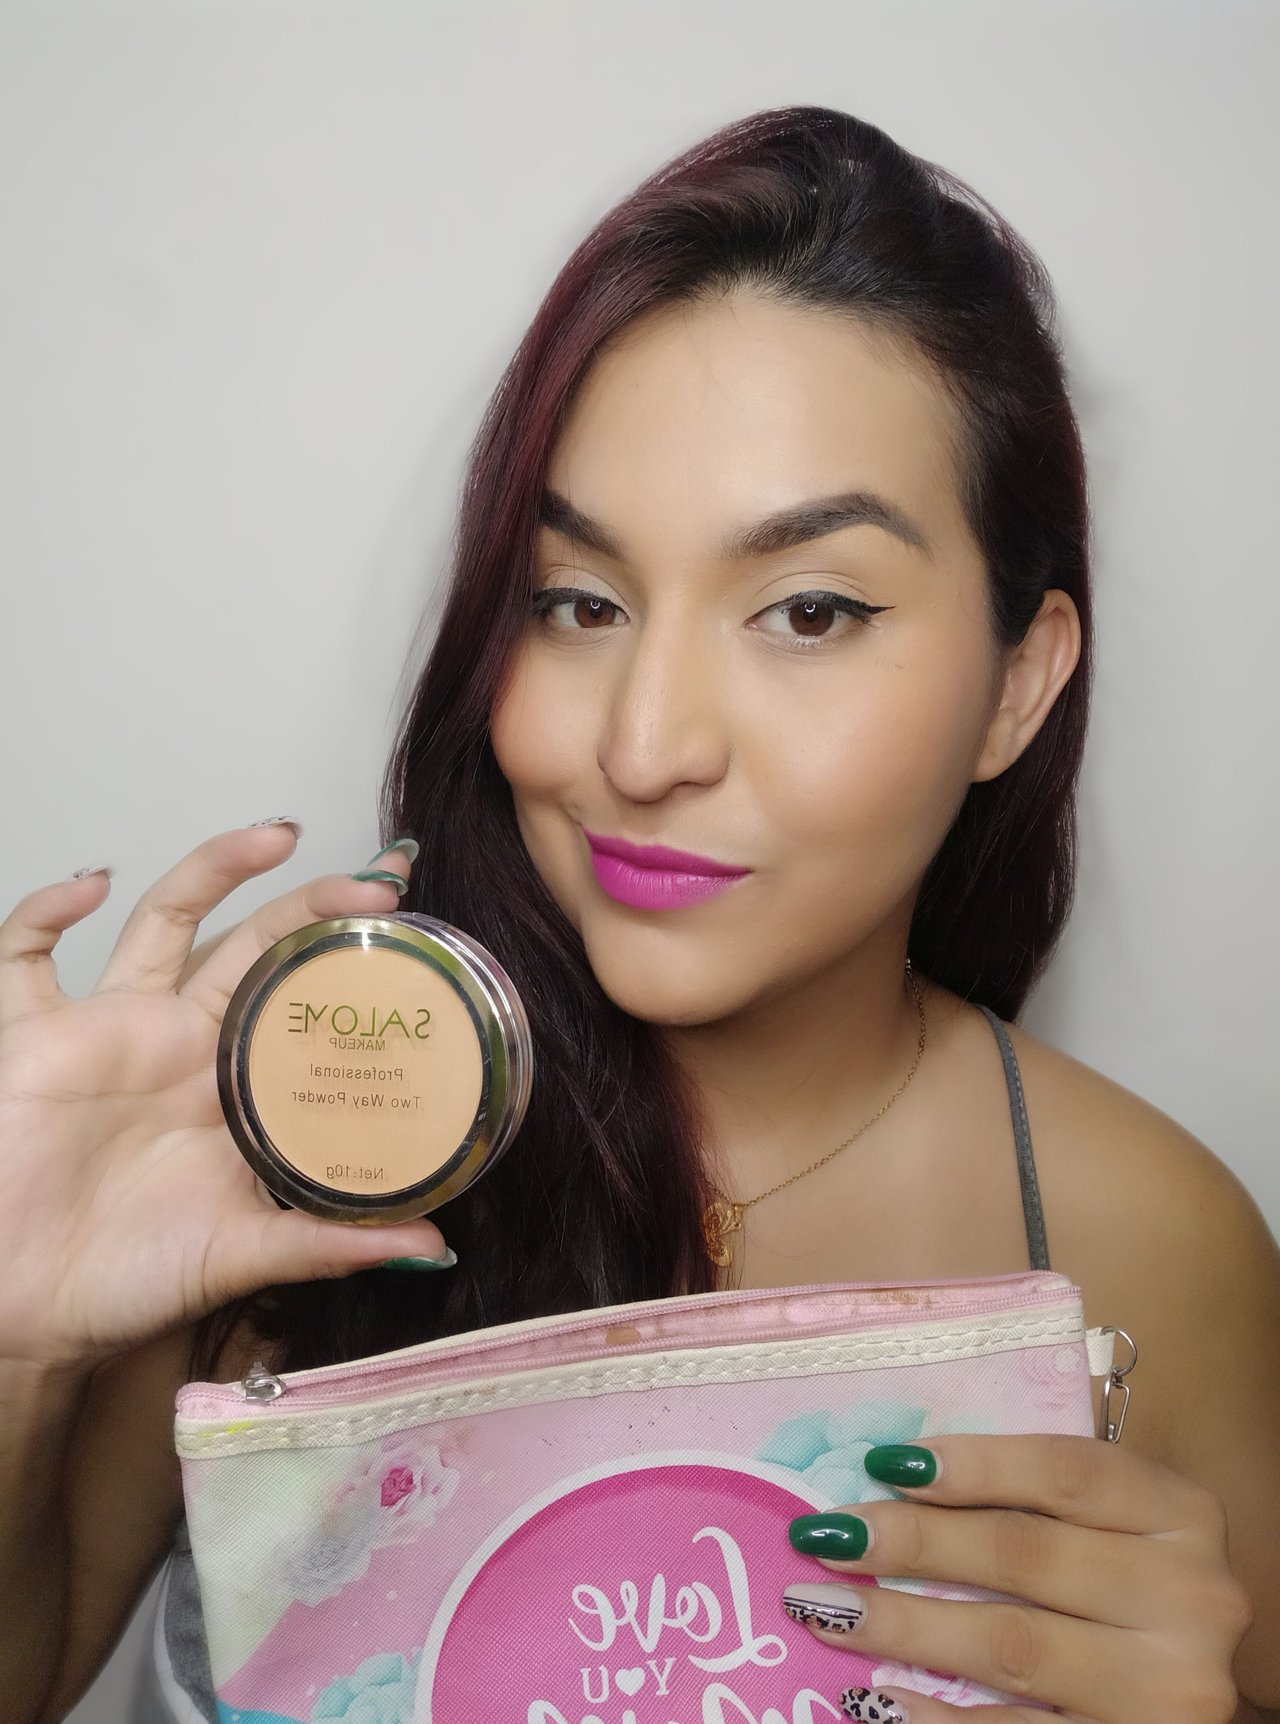 Borla de maquillaje  Makeup artist starter kit, How to apply